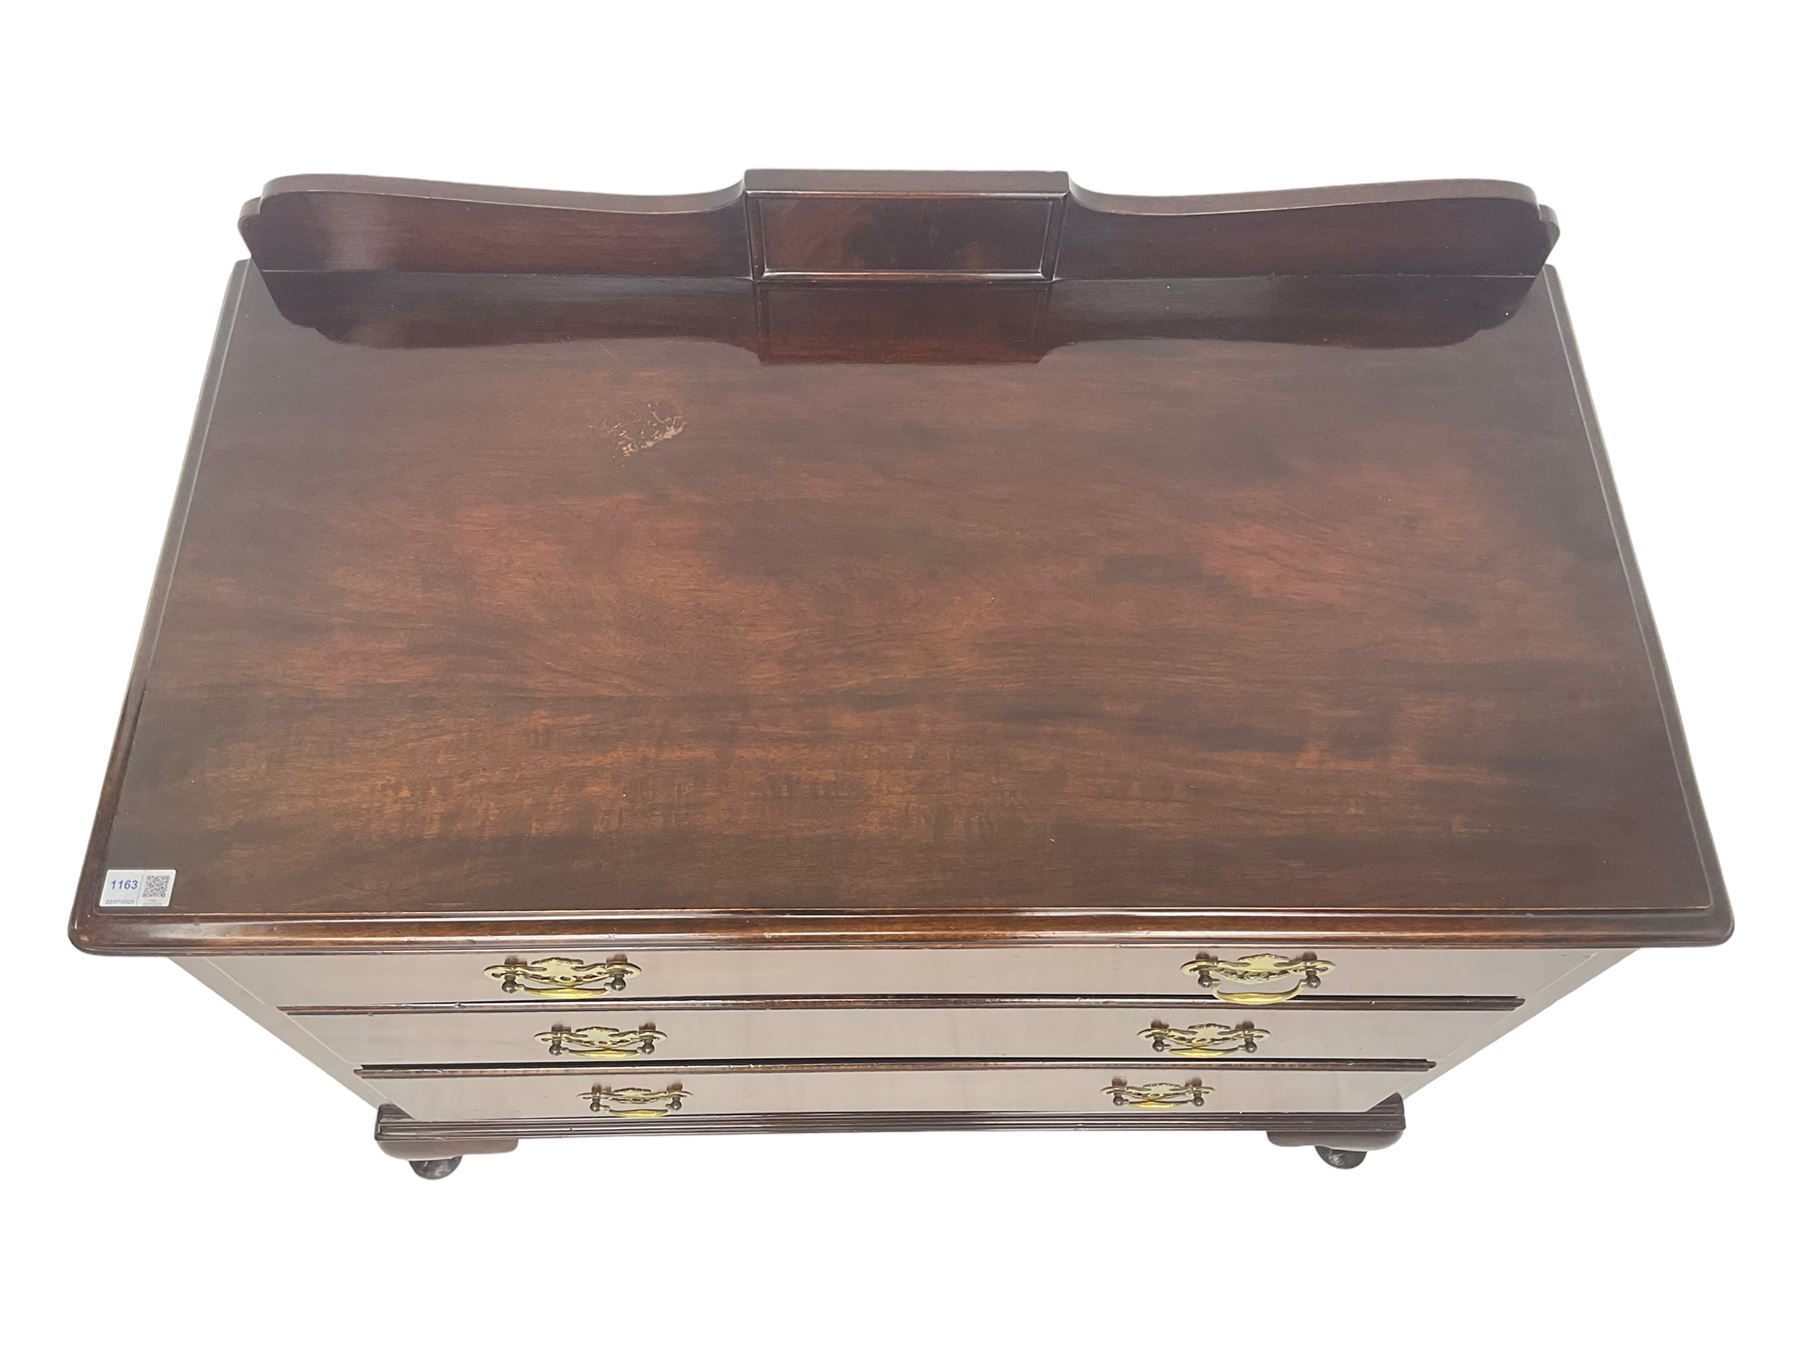 Waring & Gillow - Georgian design mahogany chest - Image 3 of 8